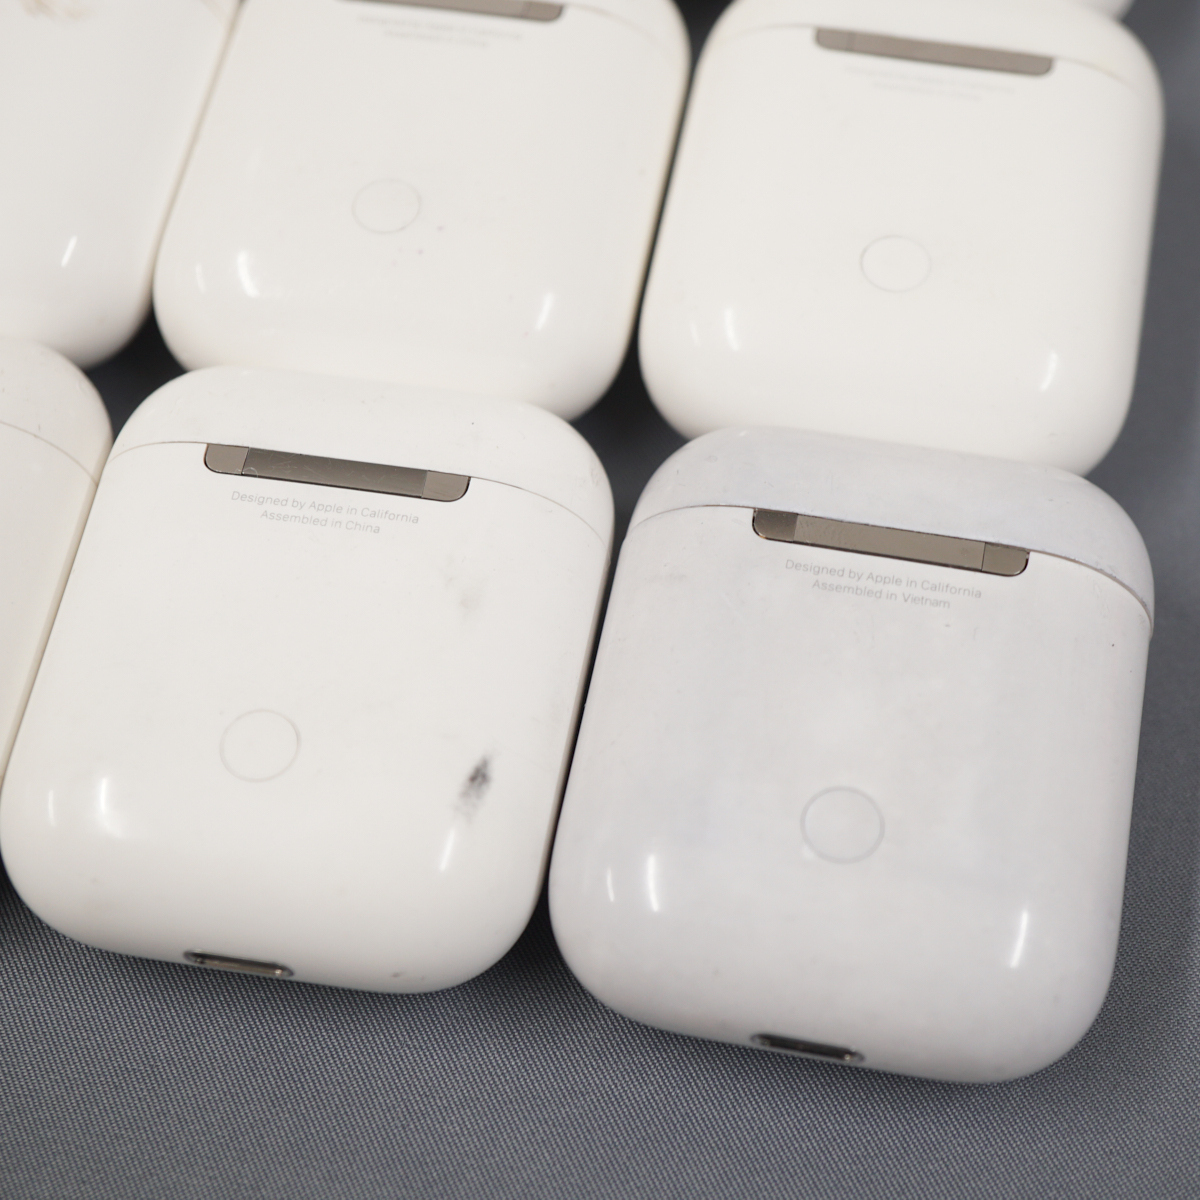 Apple AirPods Pro エアポッズ プロ 充電ケースのみ USED品 ワイヤレスイヤホン 通電確認のみ まとめ売り 【ジャンク扱い】セット KR V0128_画像10